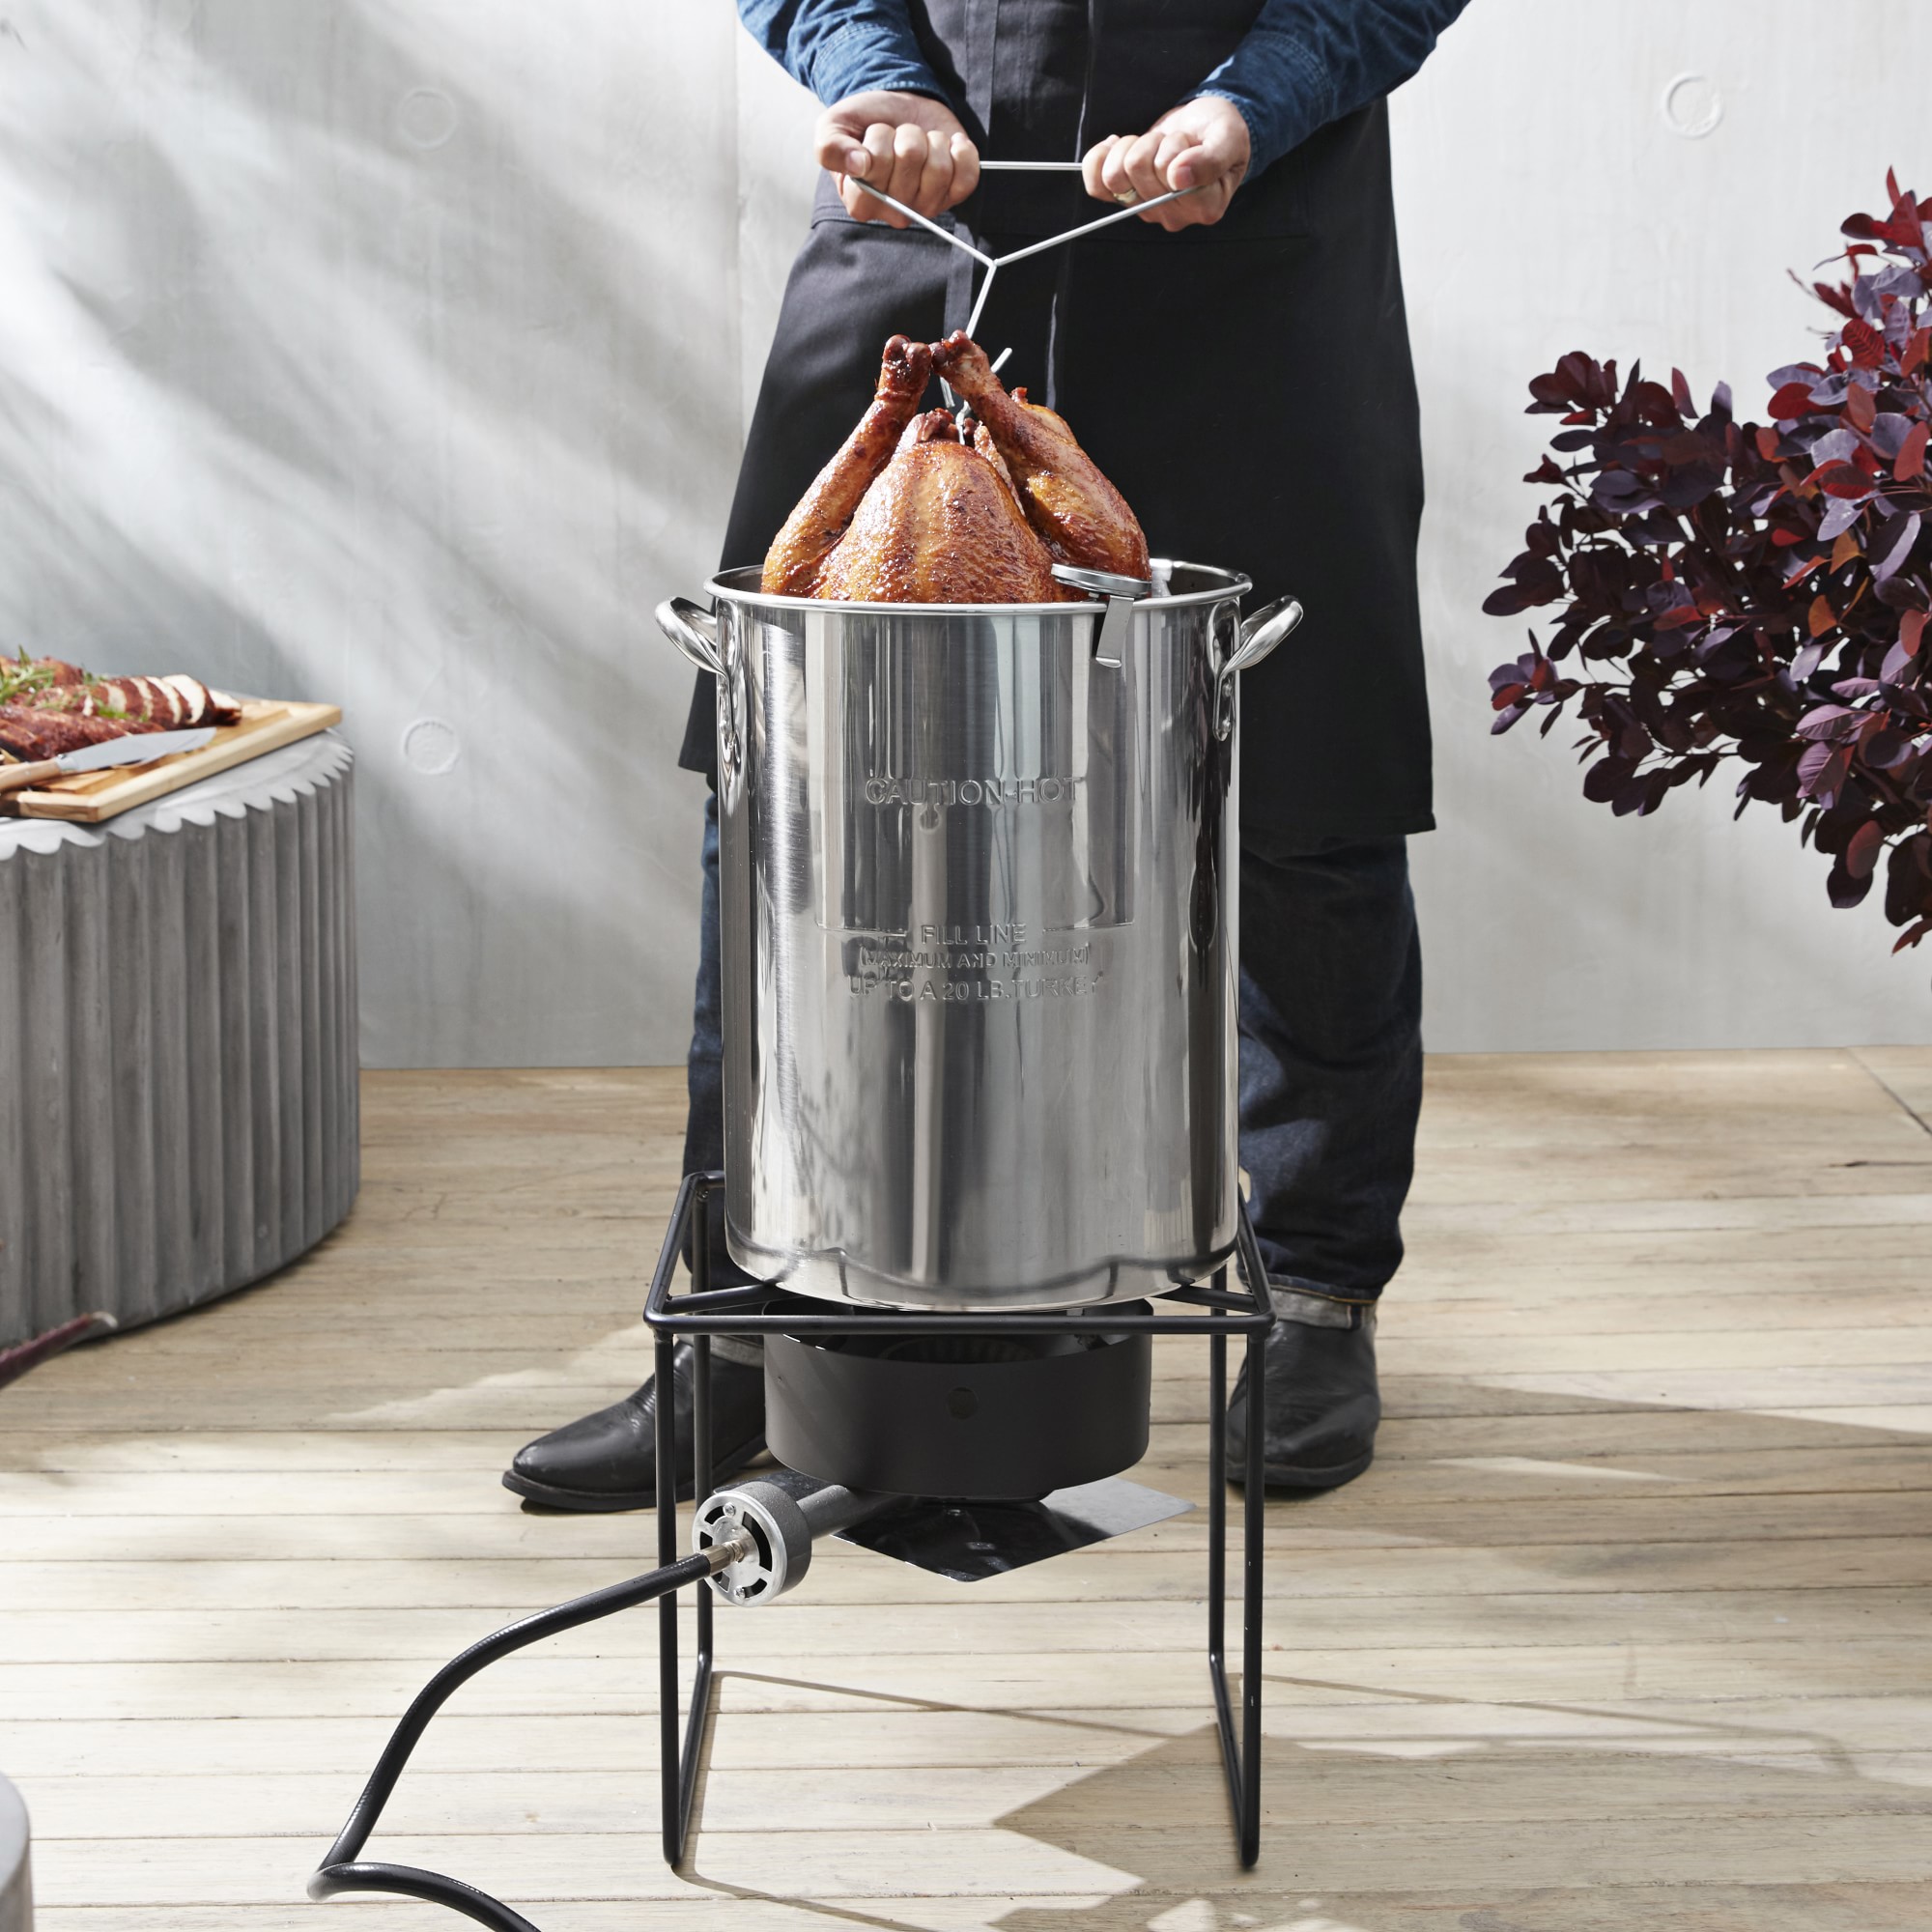 King Kooker Outdoor Turkey Fryer with Stainless-Steel Pot